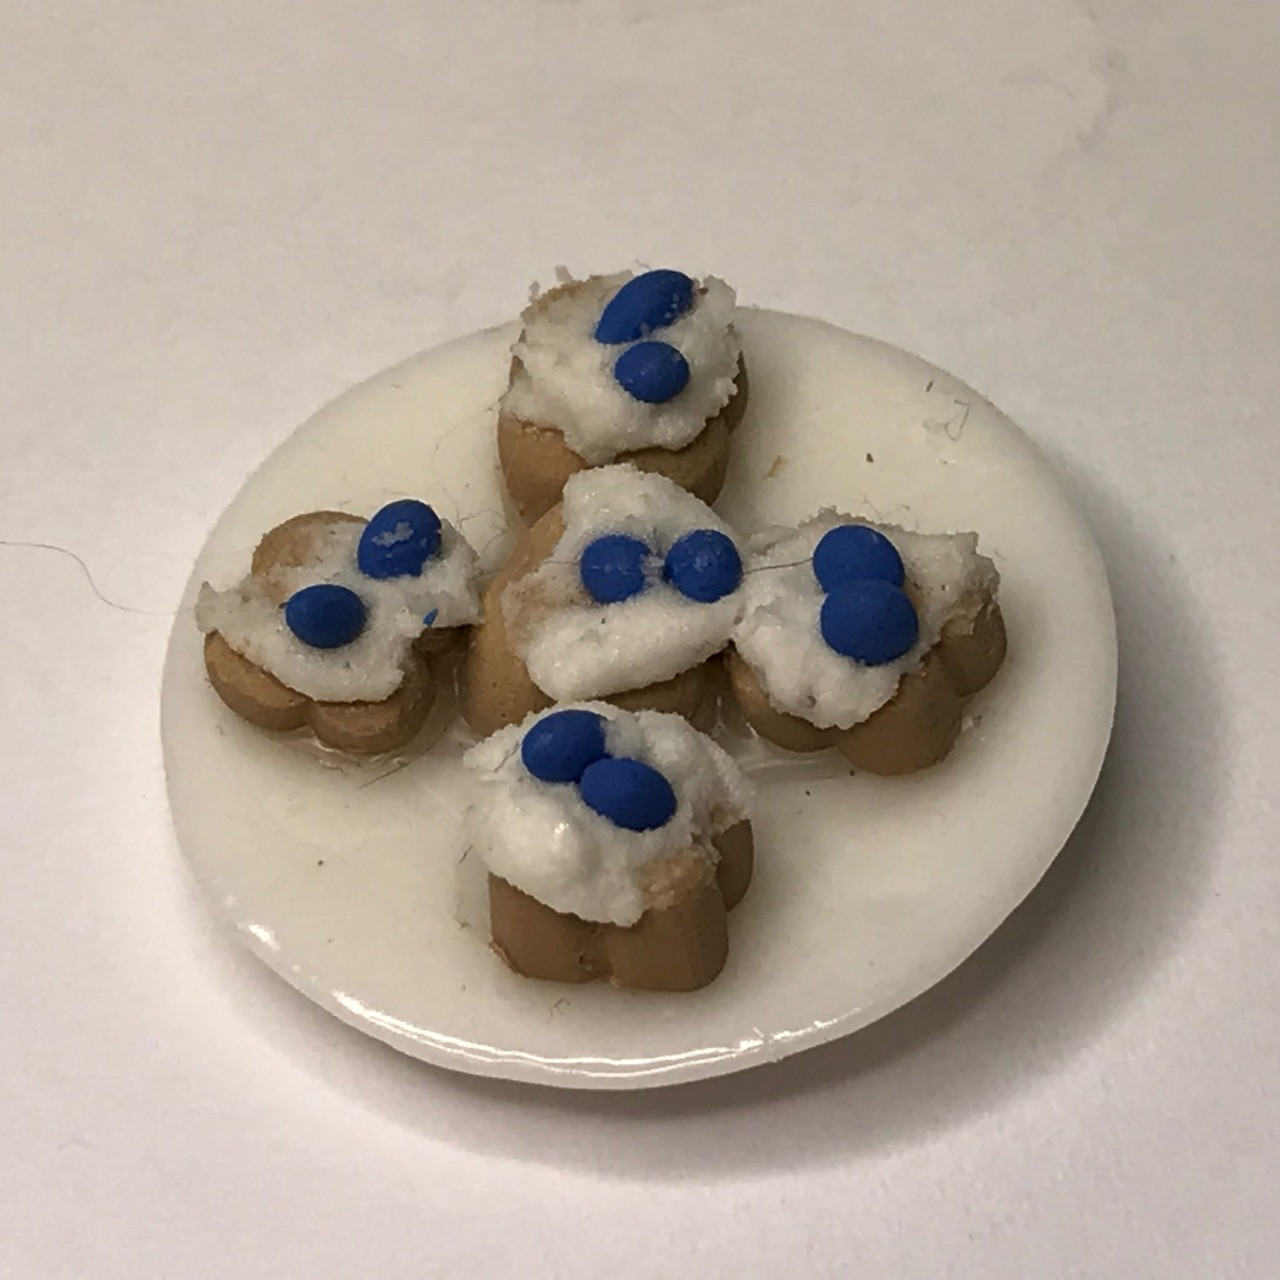 Blueberry tarts on white ceramic plate